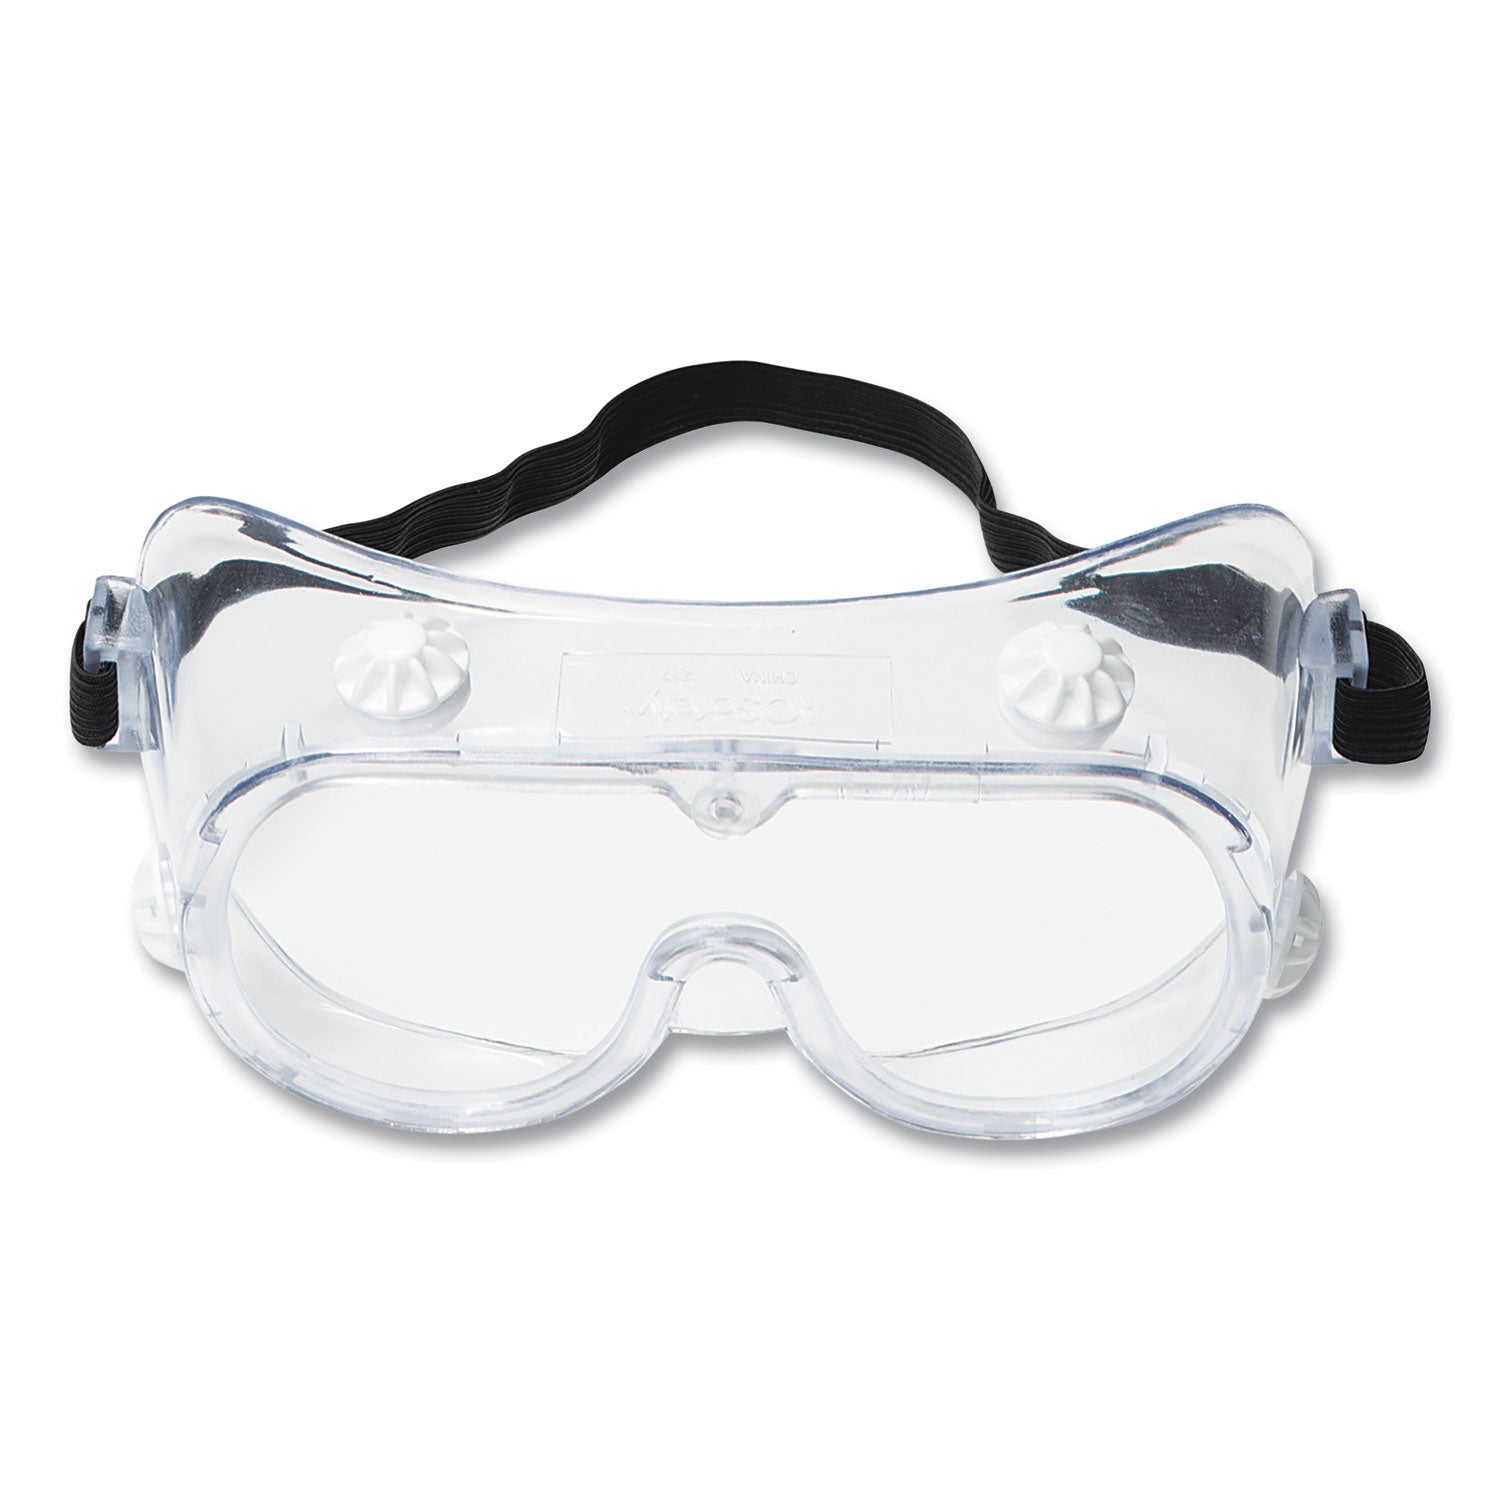 safety-splash-goggle-334-clear-lens_mmm406600000010 - 2